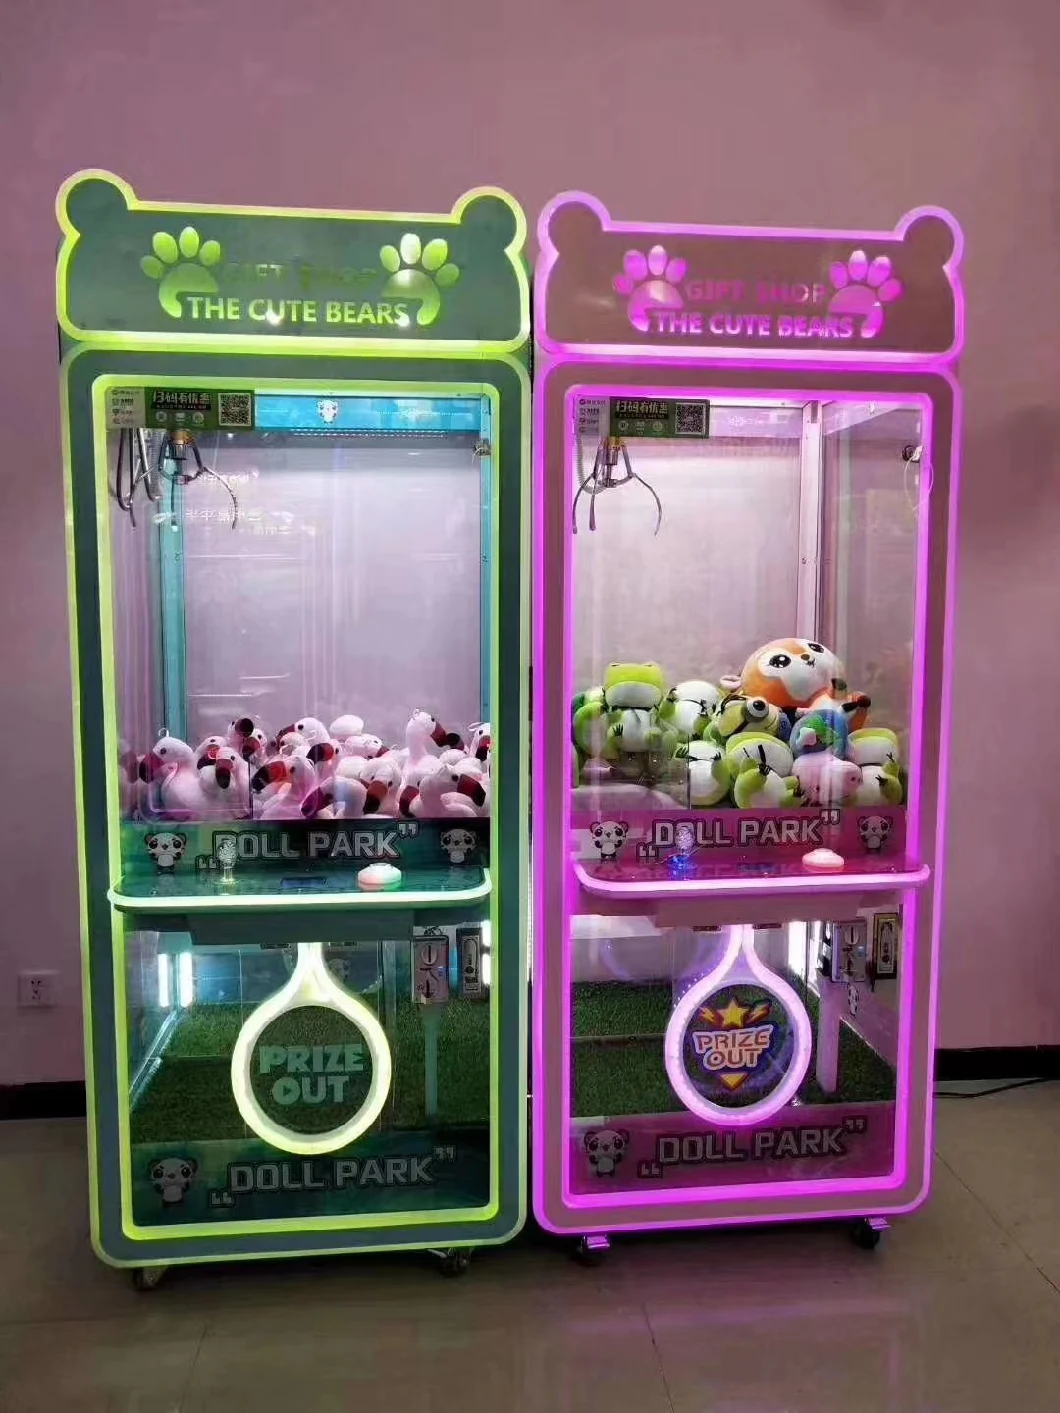 Gift Machines/Prize/Toy Vending/Price/Vending/Amusement/Arcade/Crane Claw/Toy Crane/Arcade Claw/Claw Crane /Claw/Crane/Game Machine